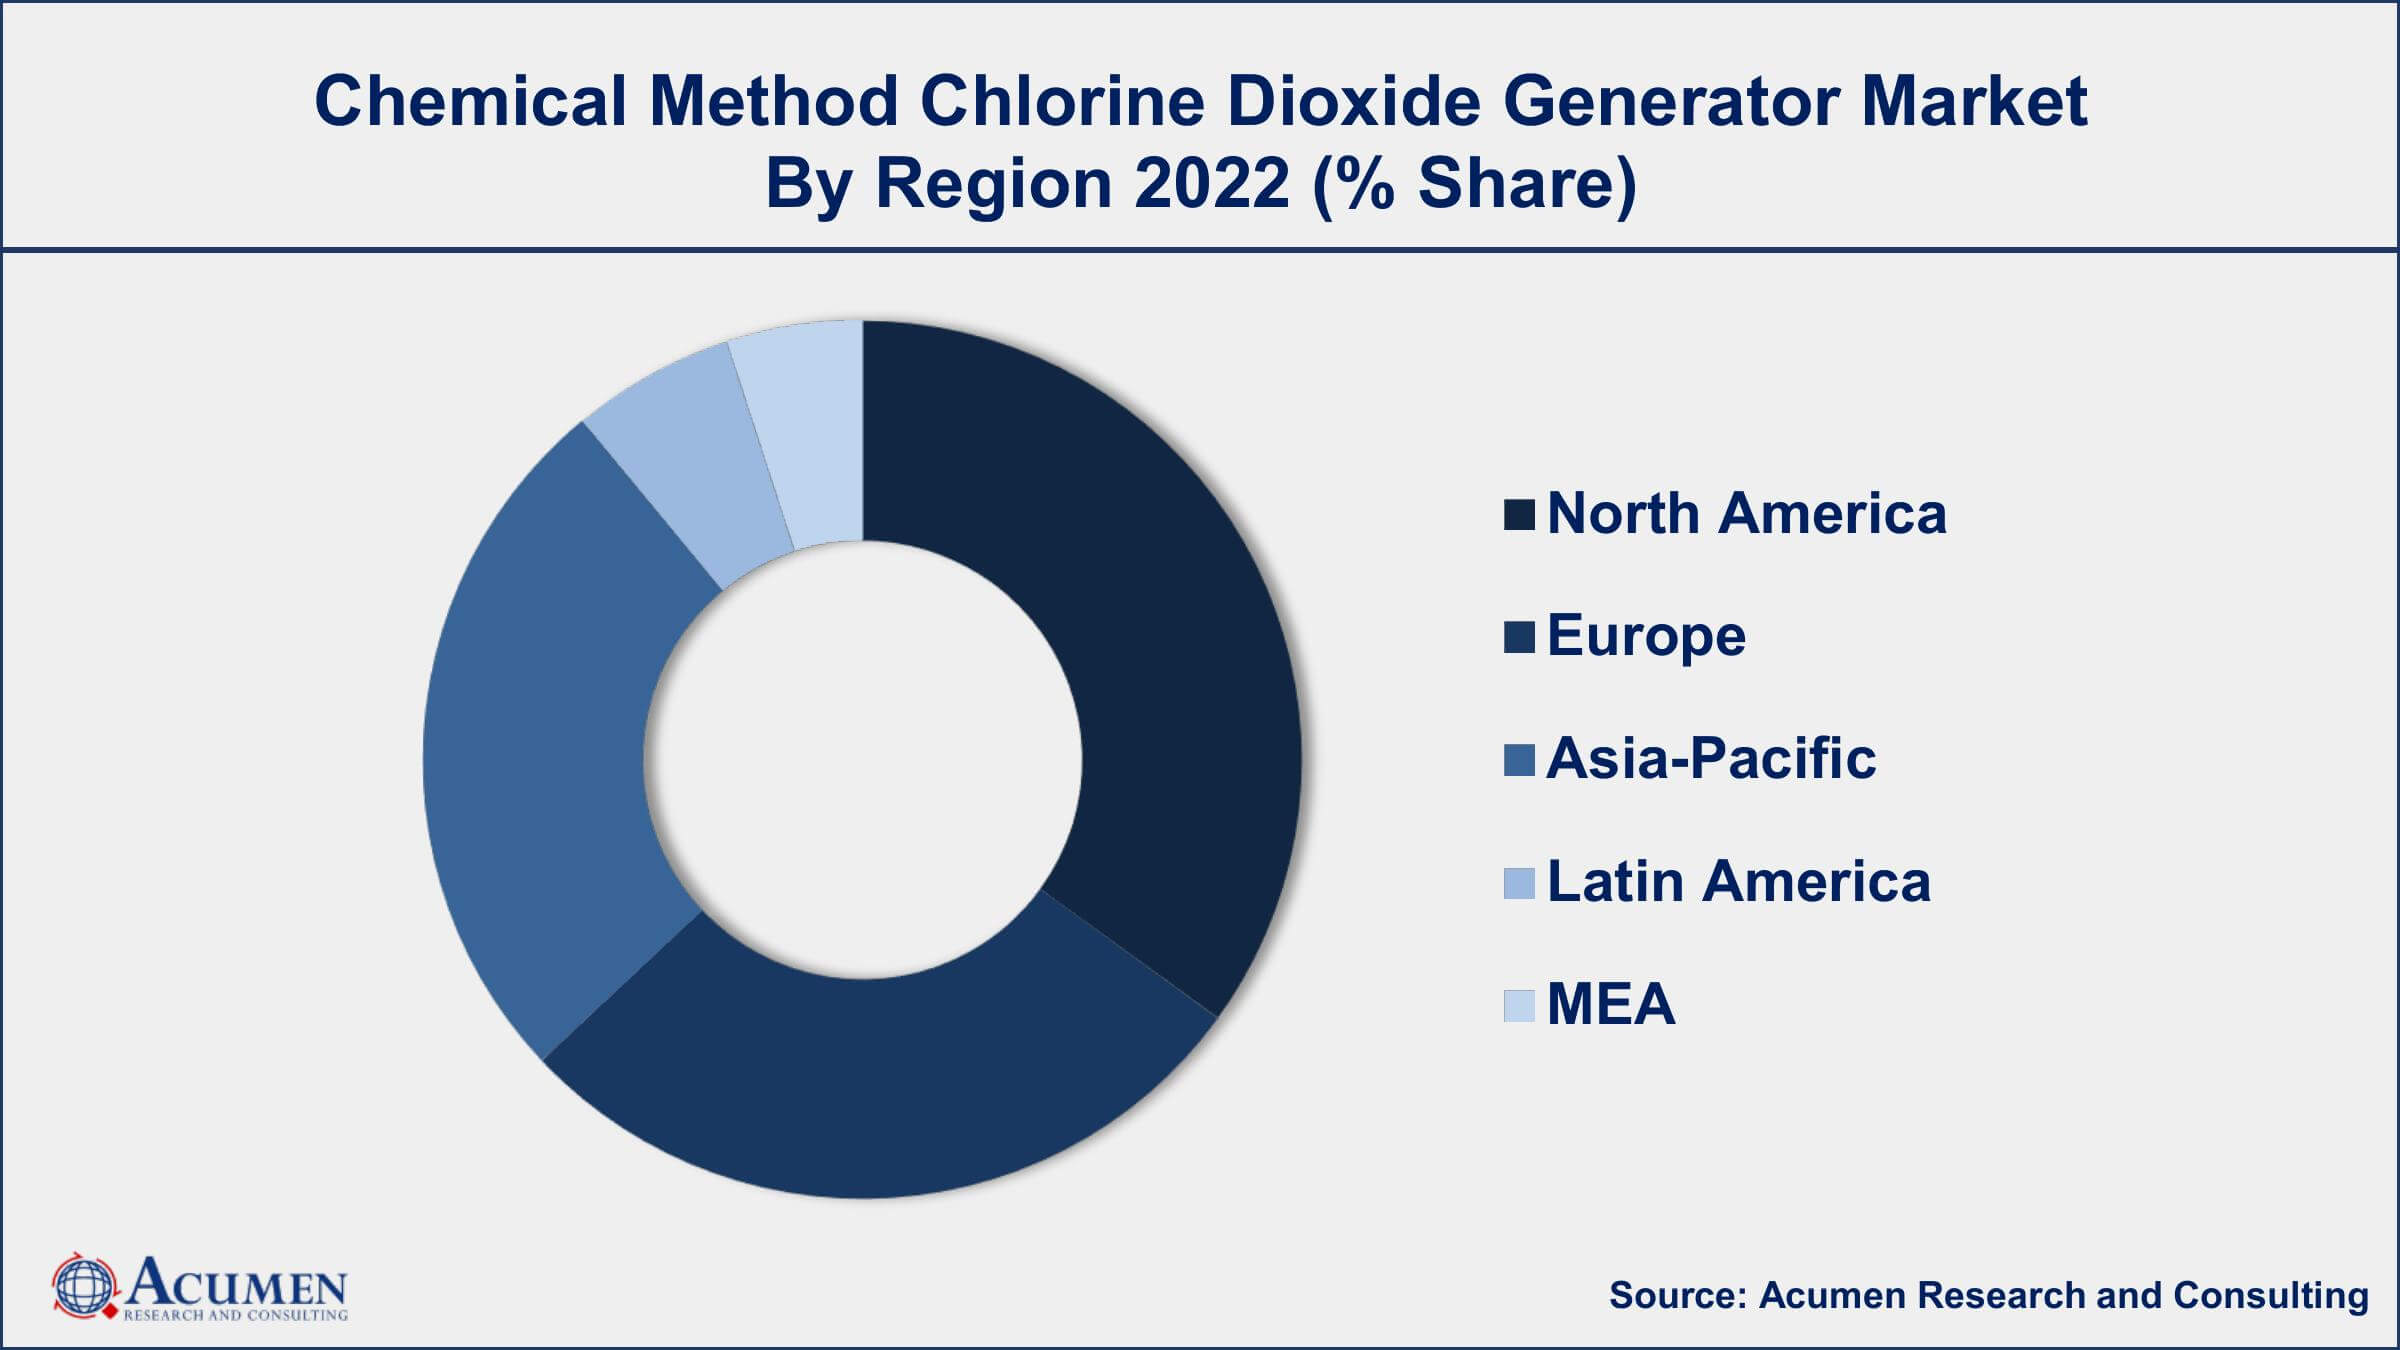 Chemical Method Chlorine Dioxide Generator Market Dynamics